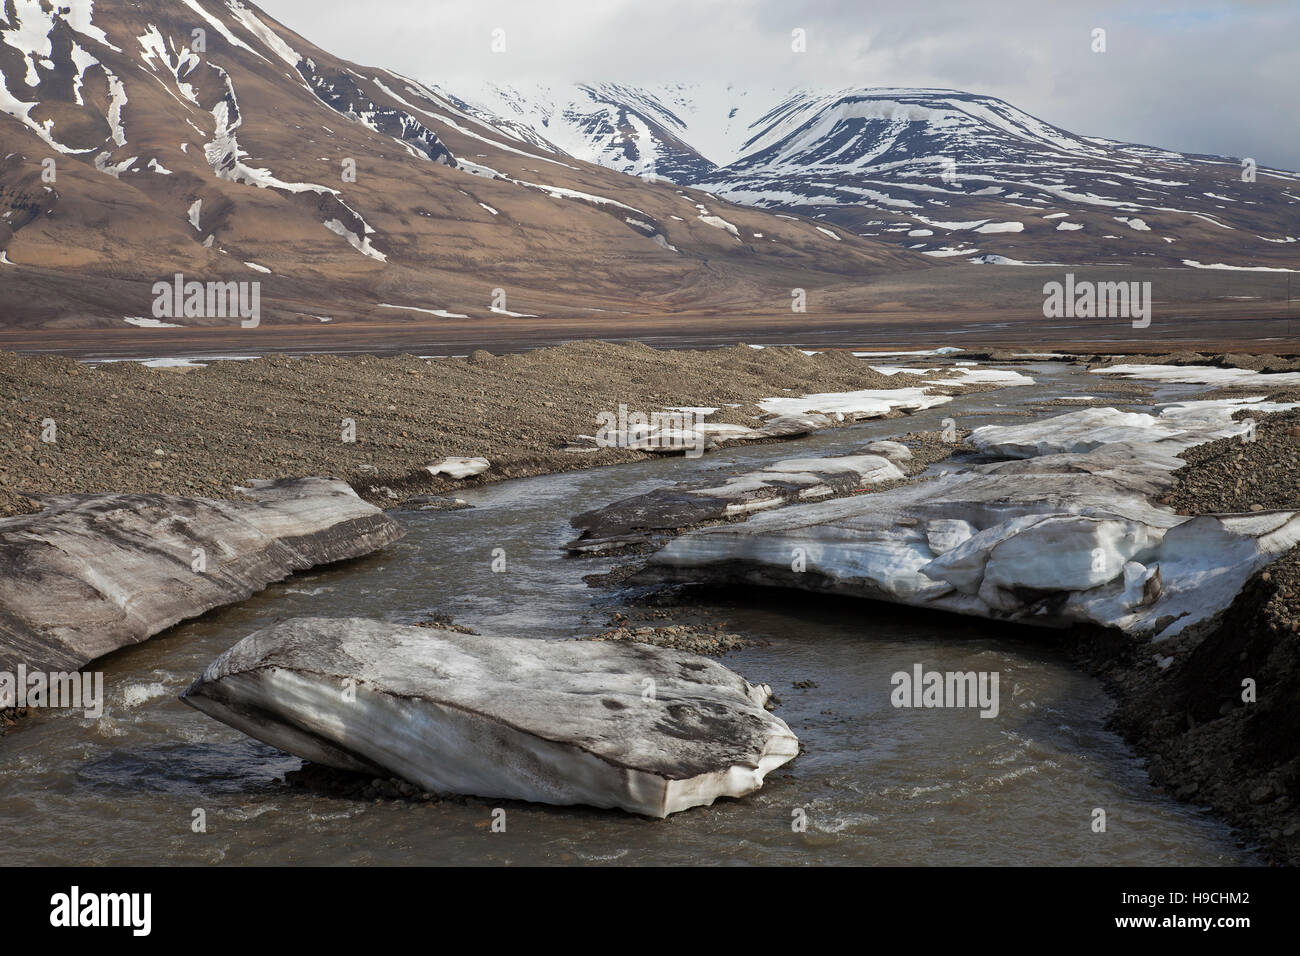 Paesaggio arido in Adventdalen / Avvento Valley East di Longyearbyen, Spitsbergen / Svalbard in estate Foto Stock